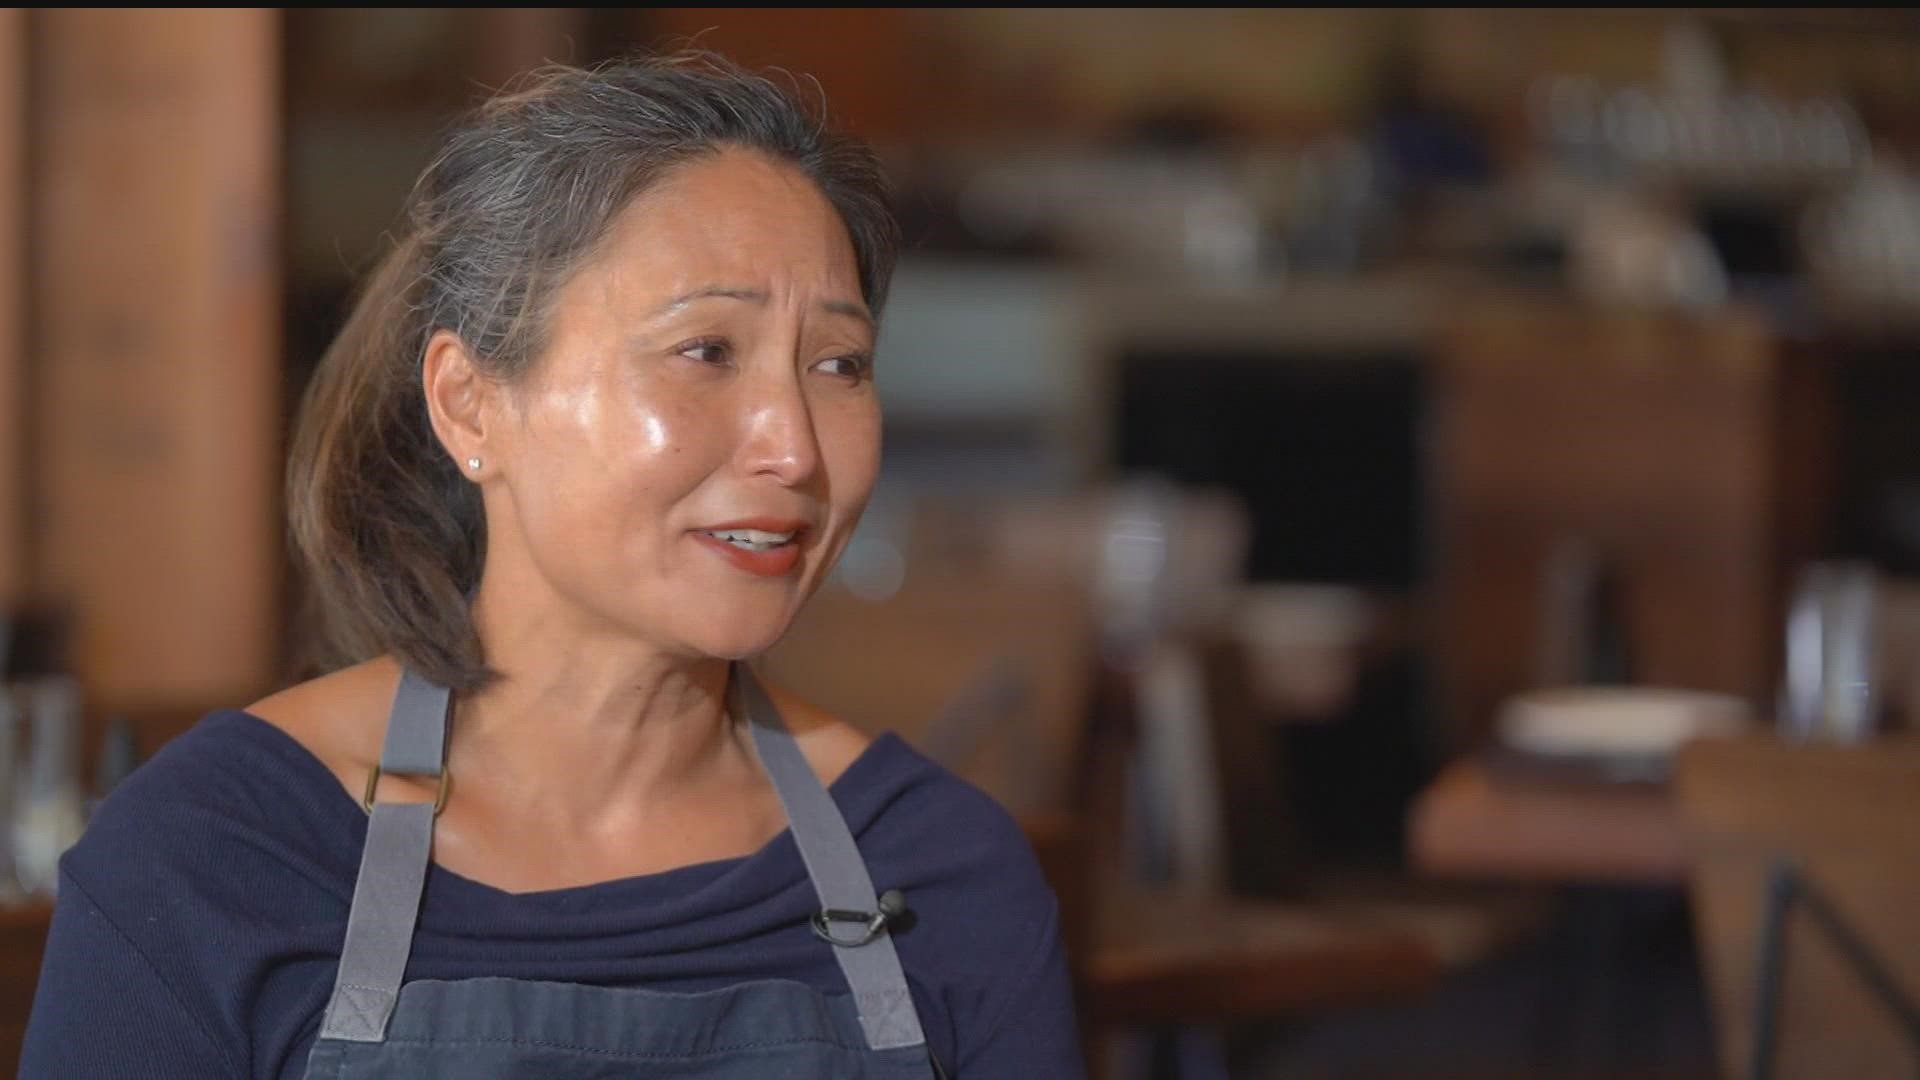 Minneapolis' James Beard Award-winning chef Ann Kim brings Young Joni to the small screen on new season of Netflix's "Chef's Table."